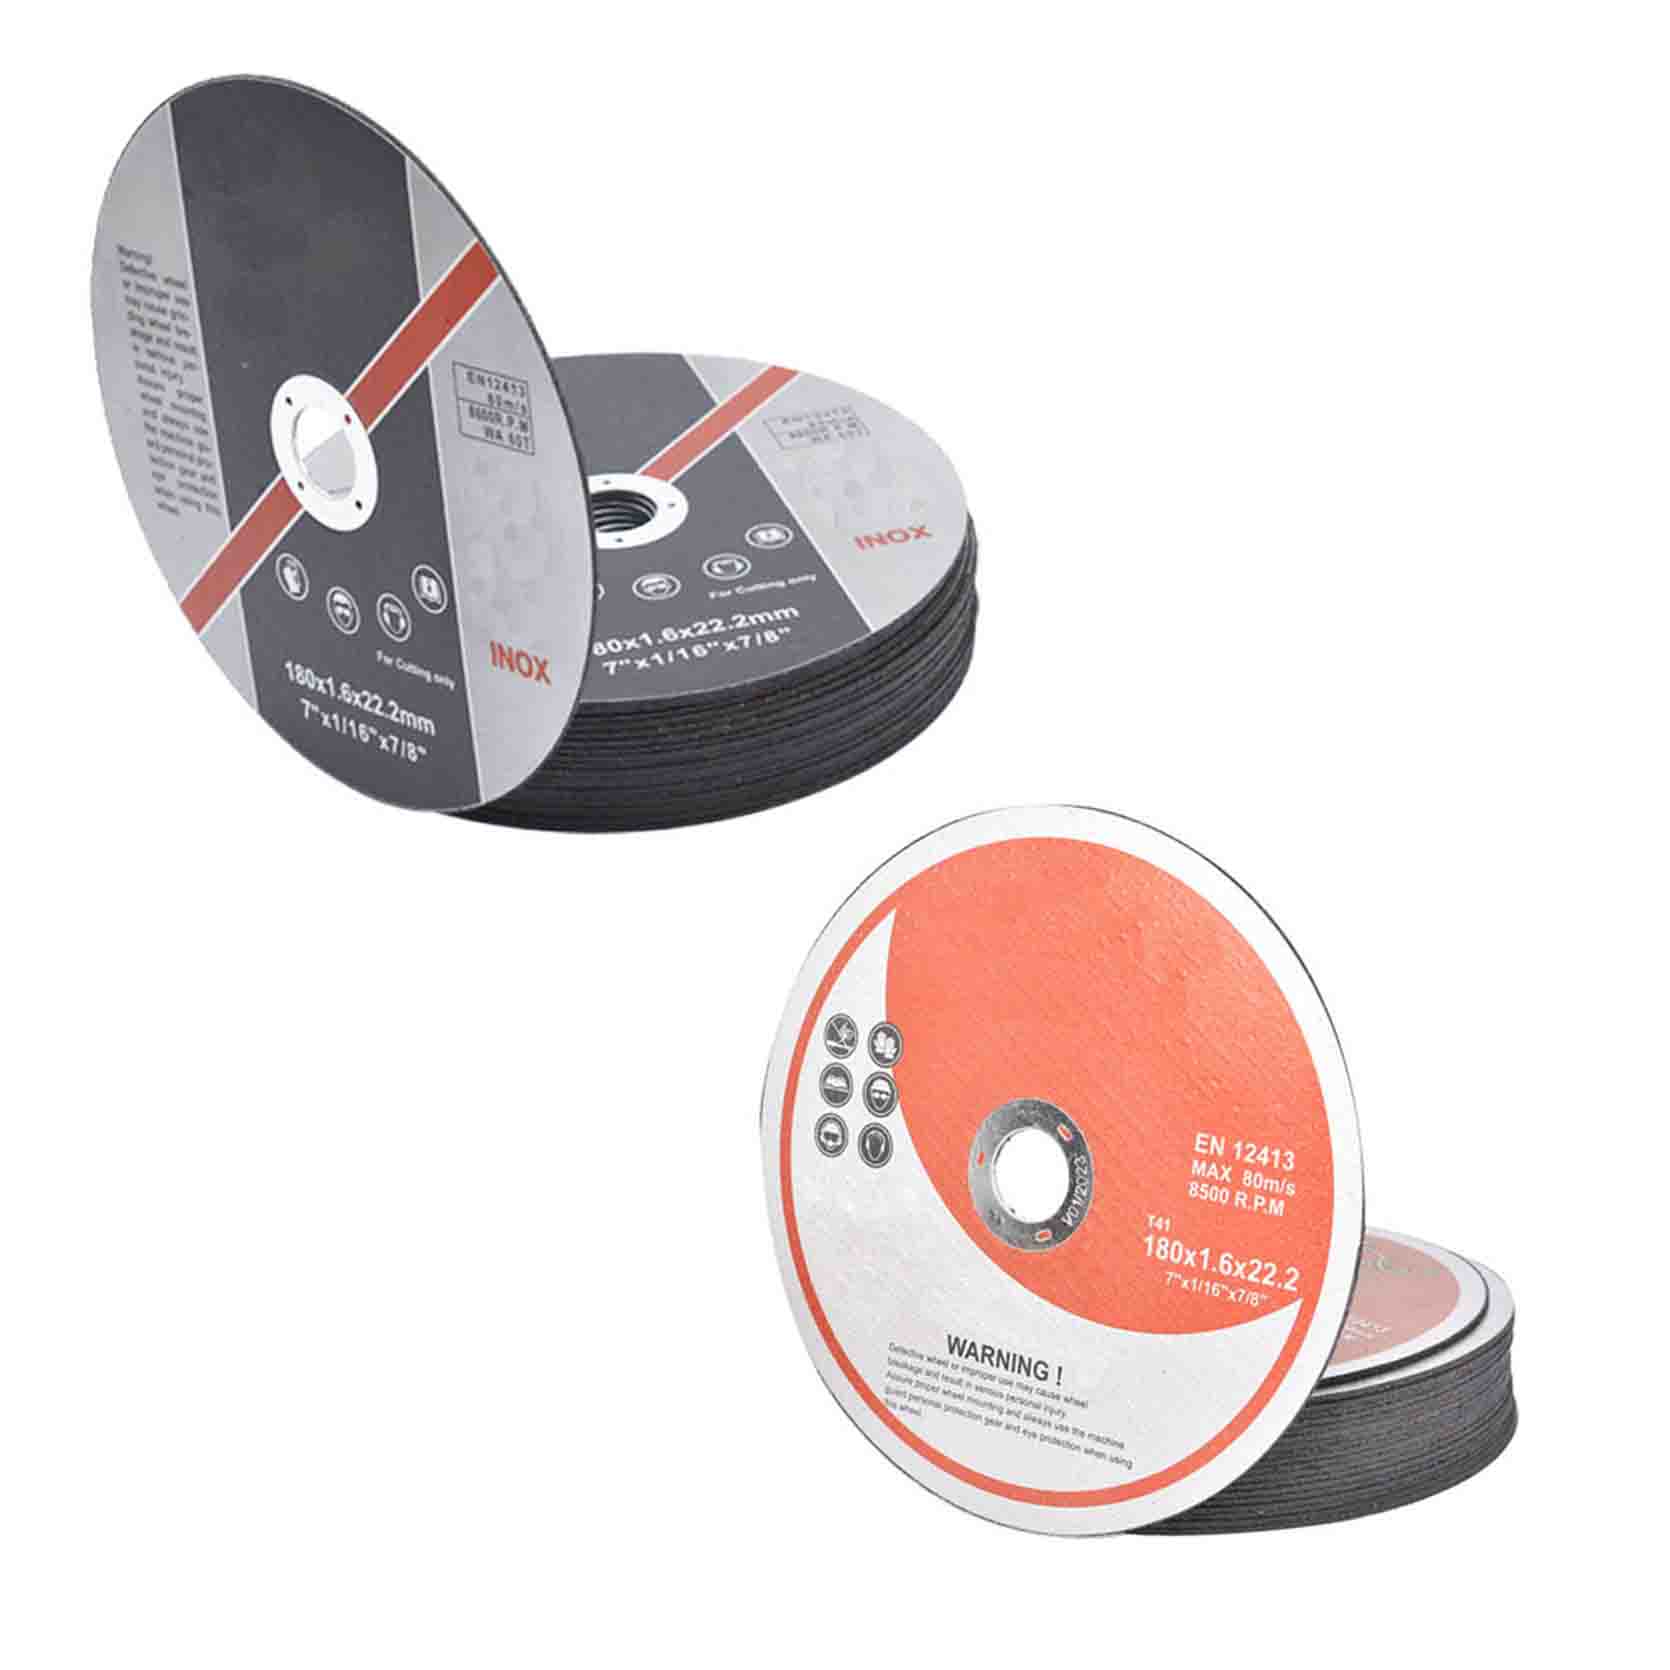 findmall 50 Pack 7"x1/16"x7/8" Cut-Off Wheel - Metal & Stainless Steel Cutting Discs FINDMALLPARTS